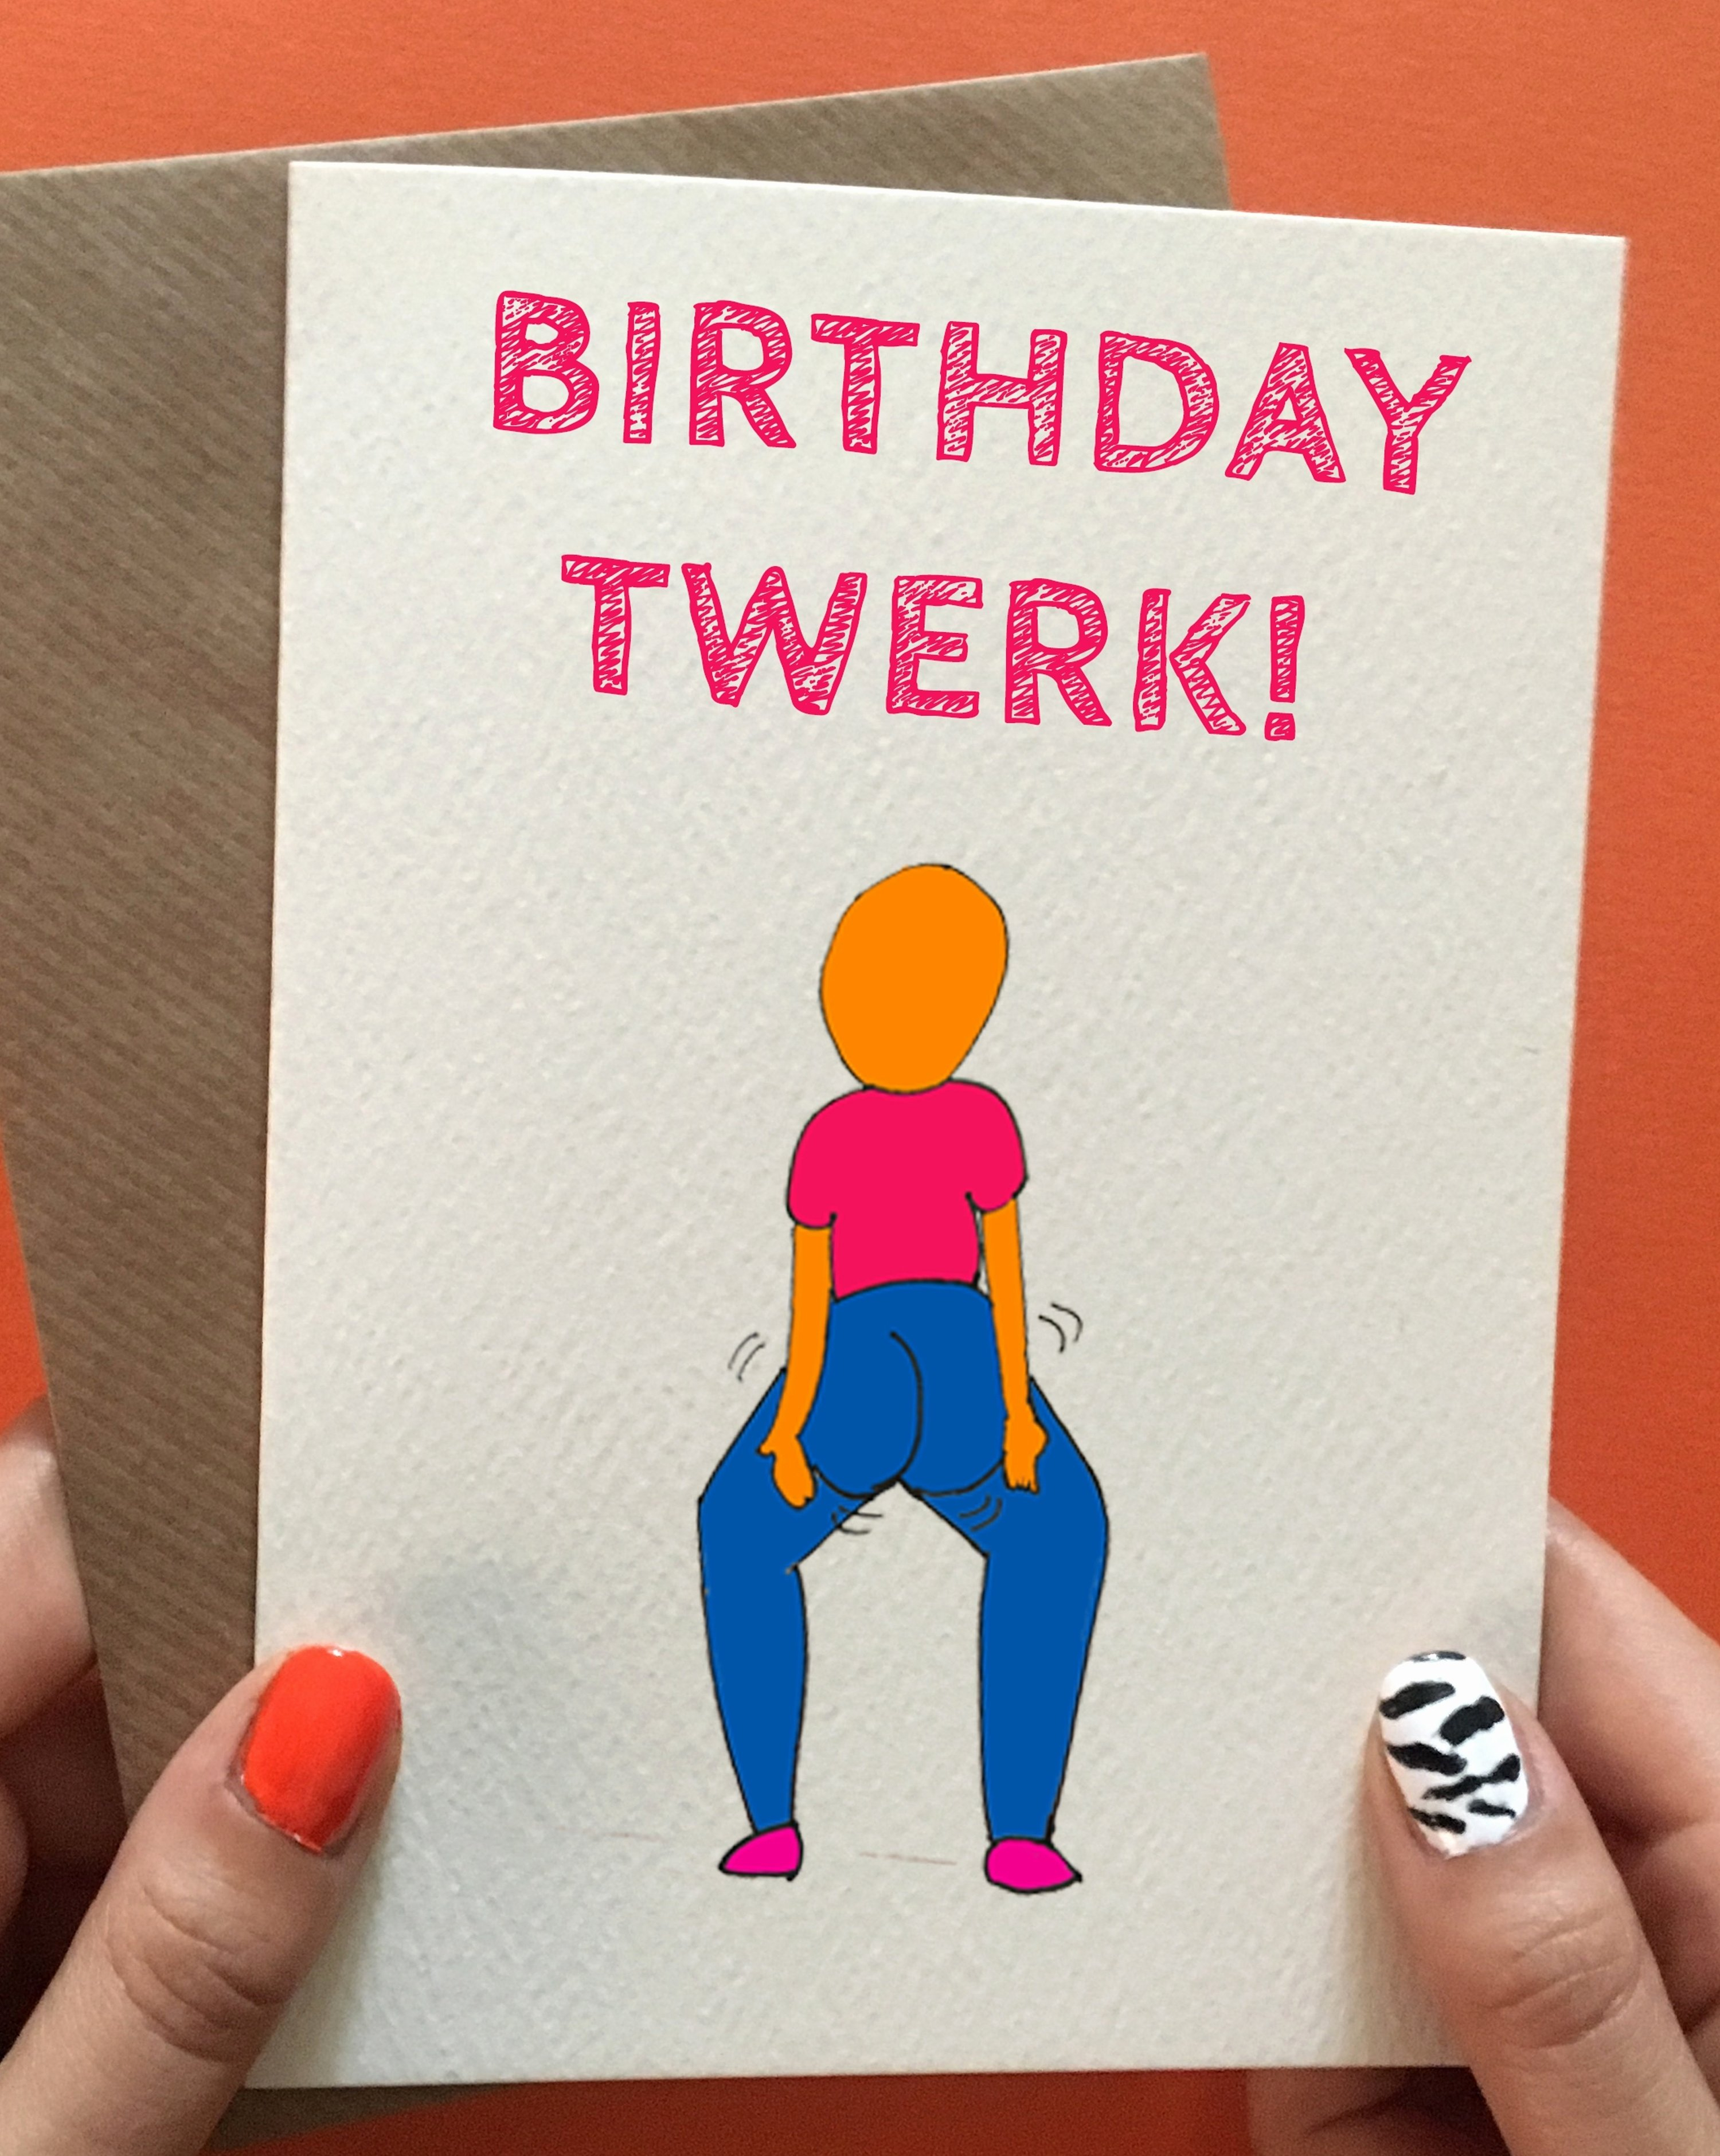 Best Friend Birthday Card Ideas 97 Ideas For Birthday Cards For Best Friends Creative Birthday